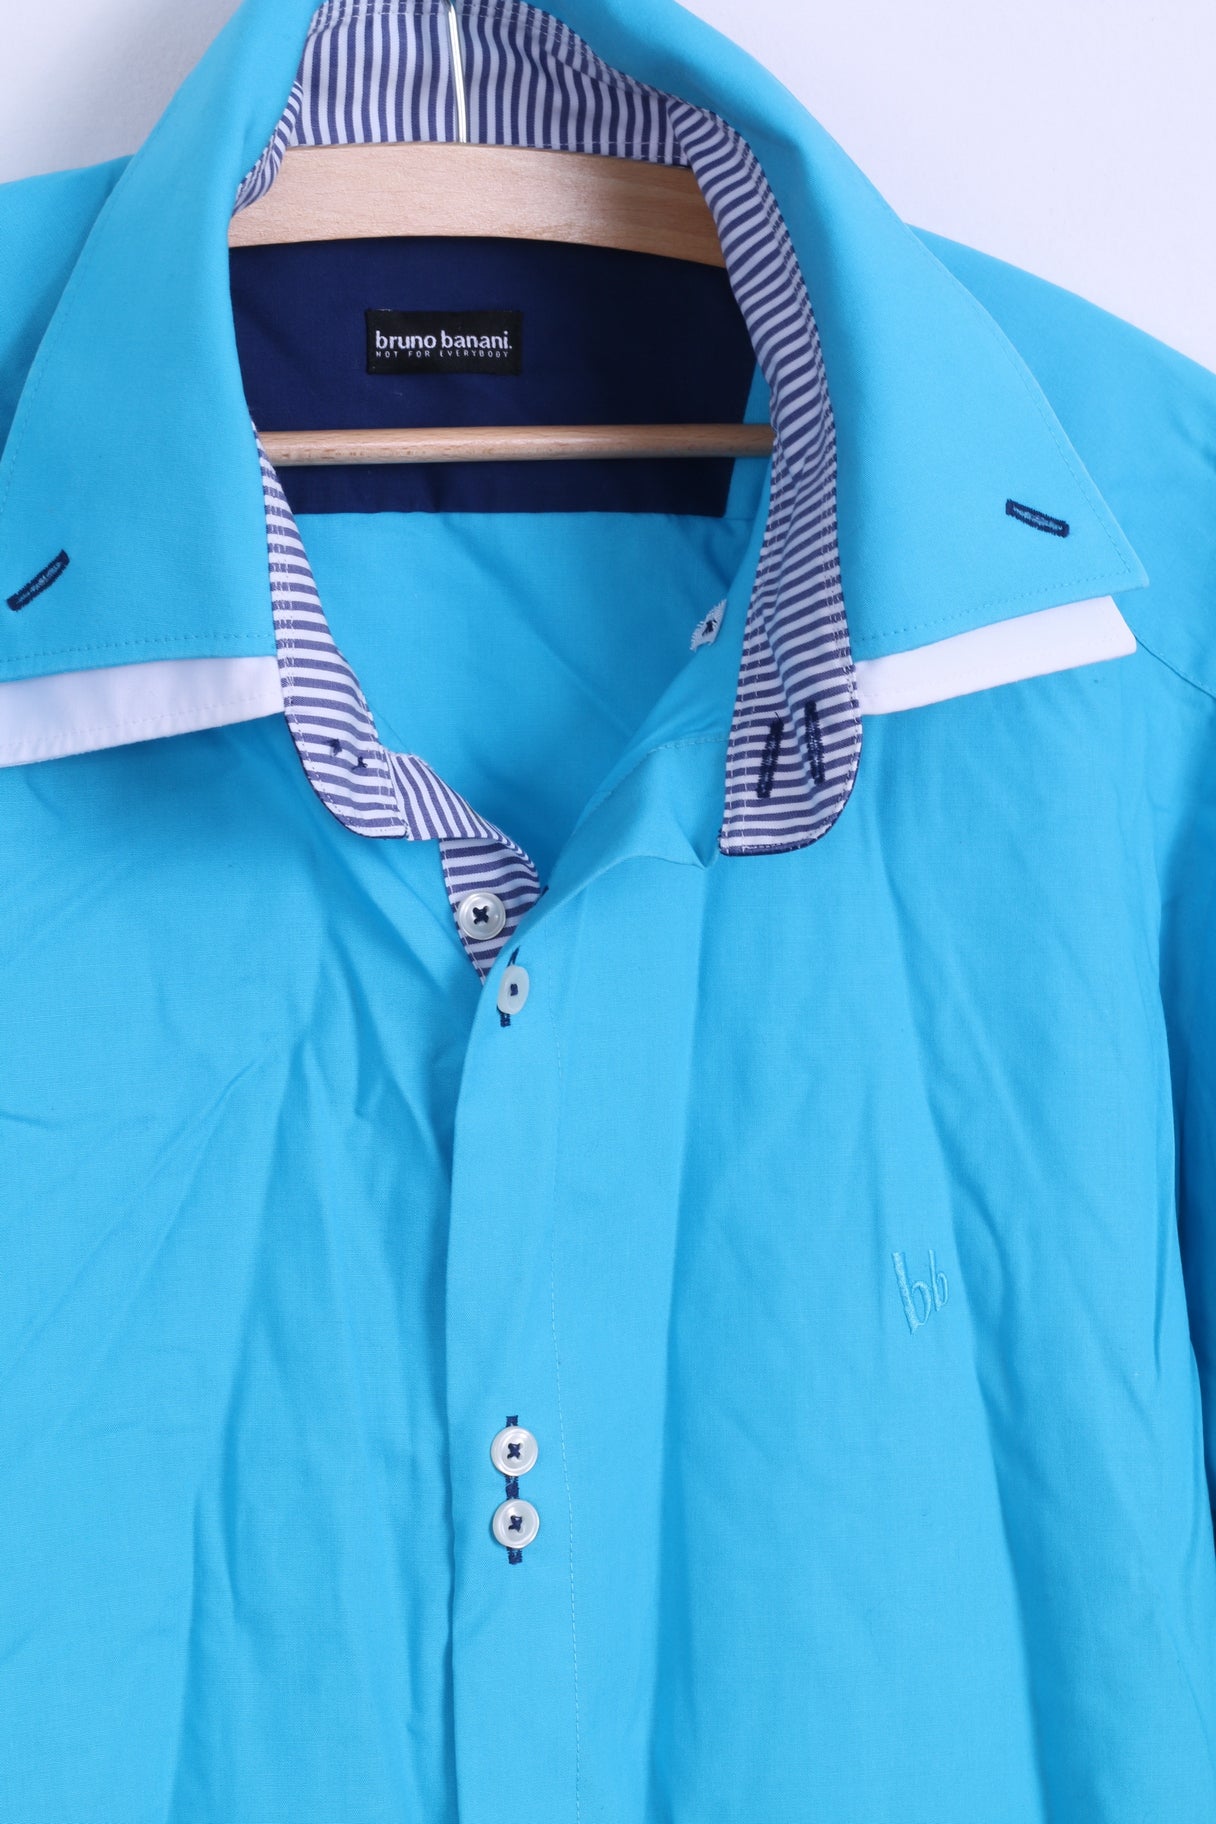 Shirt 43/44 Clothes Retrospect Cotton Blue Banani L/XL Sleeve Long – Casual Bruno Mens